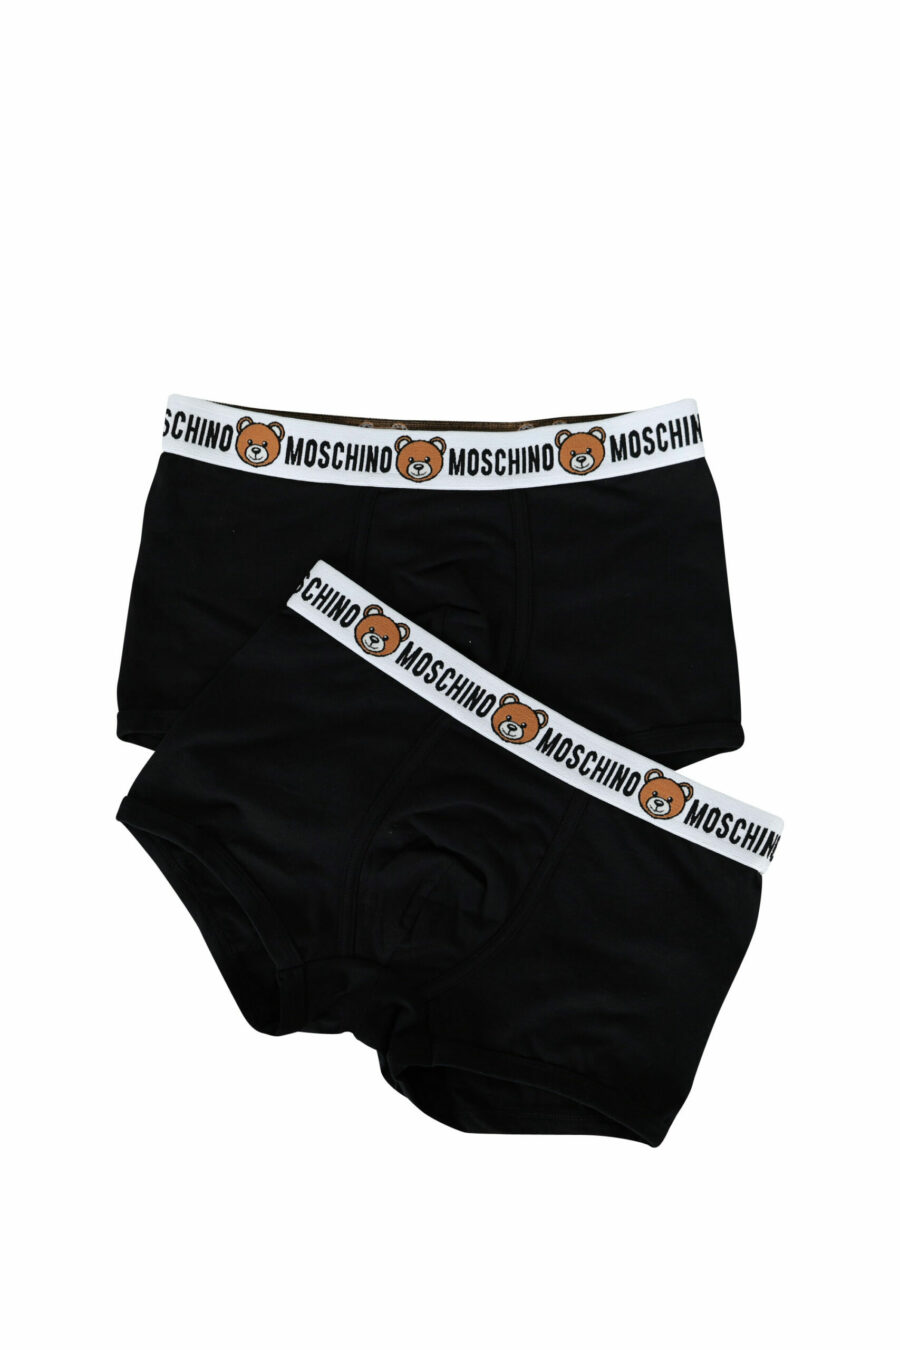 Black boxers with underbear logo on waistband - 667113004976 scaled